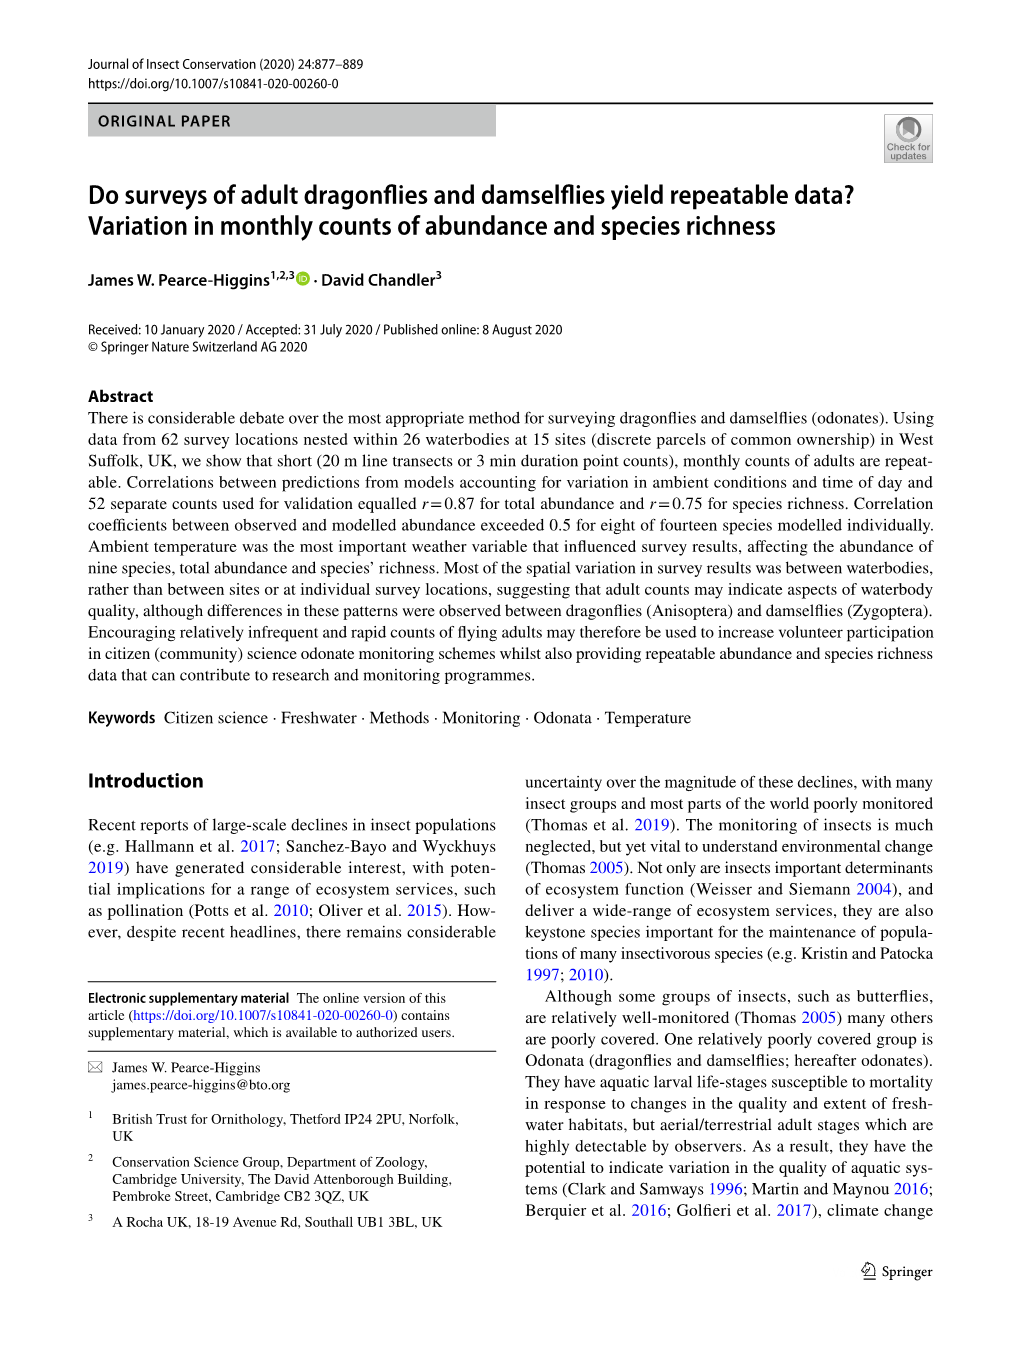 Do Surveys of Adult Dragonflies and Damselflies Yield Repeatable Data?